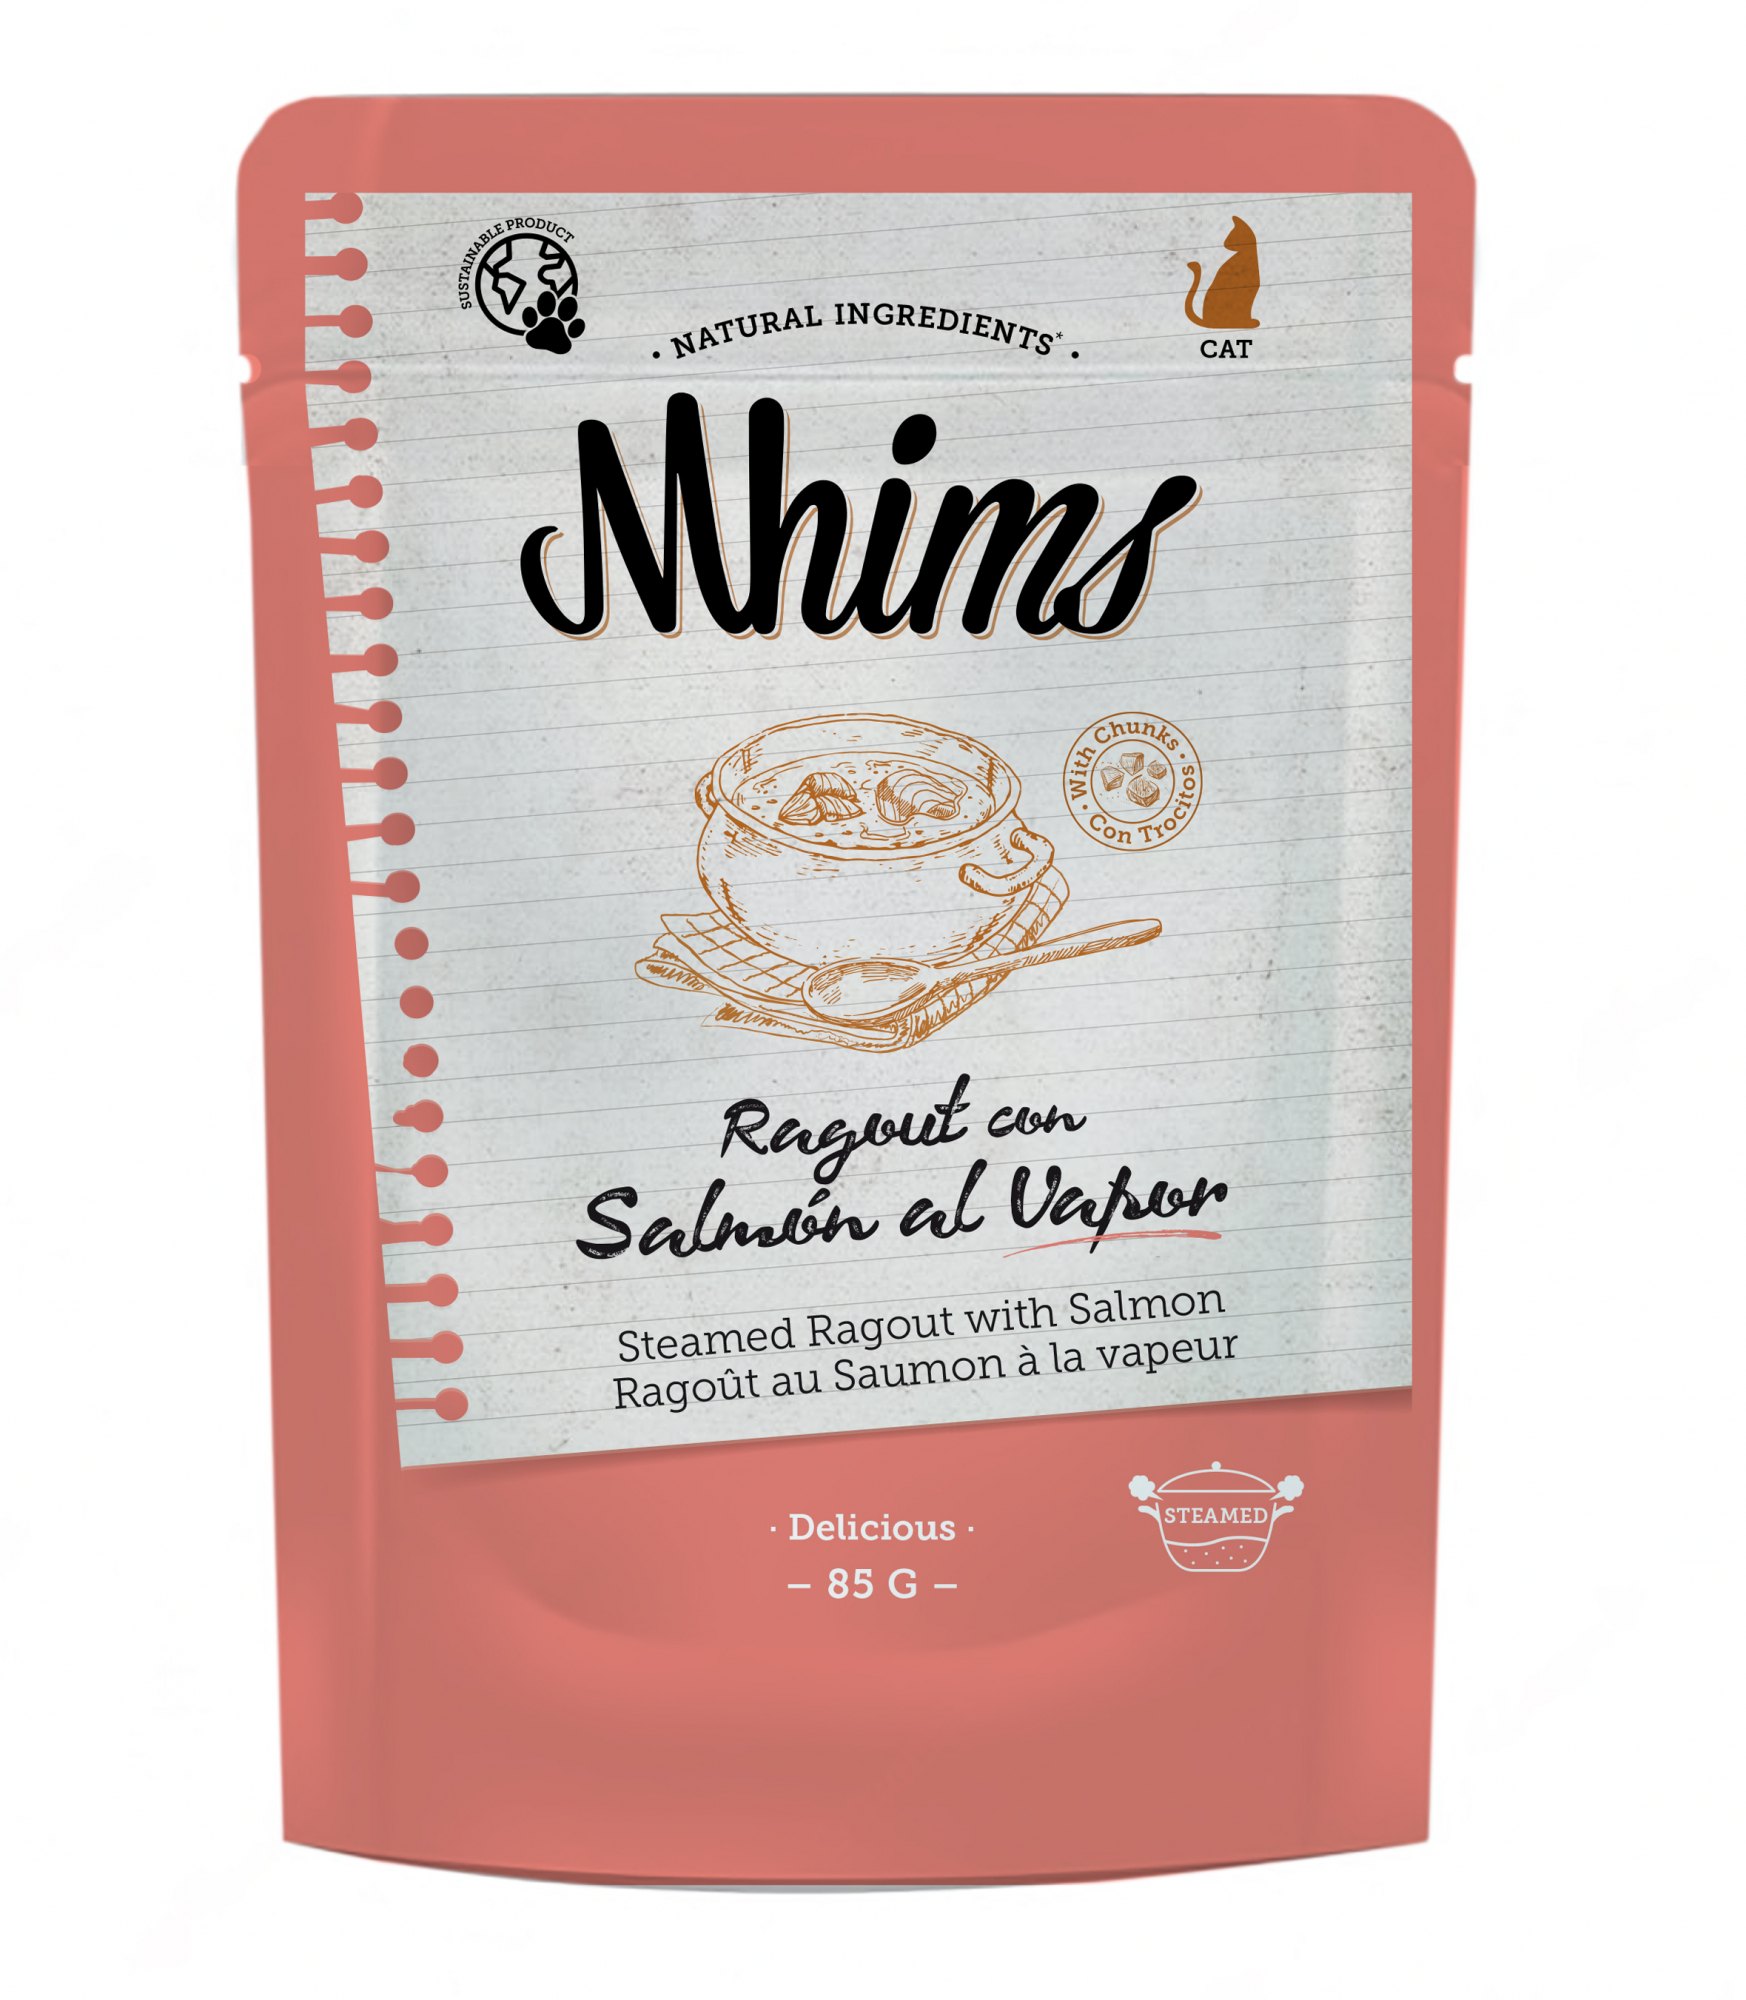 MHIMS Cat Spezzatino - Diversi gusti disponibili - 85g